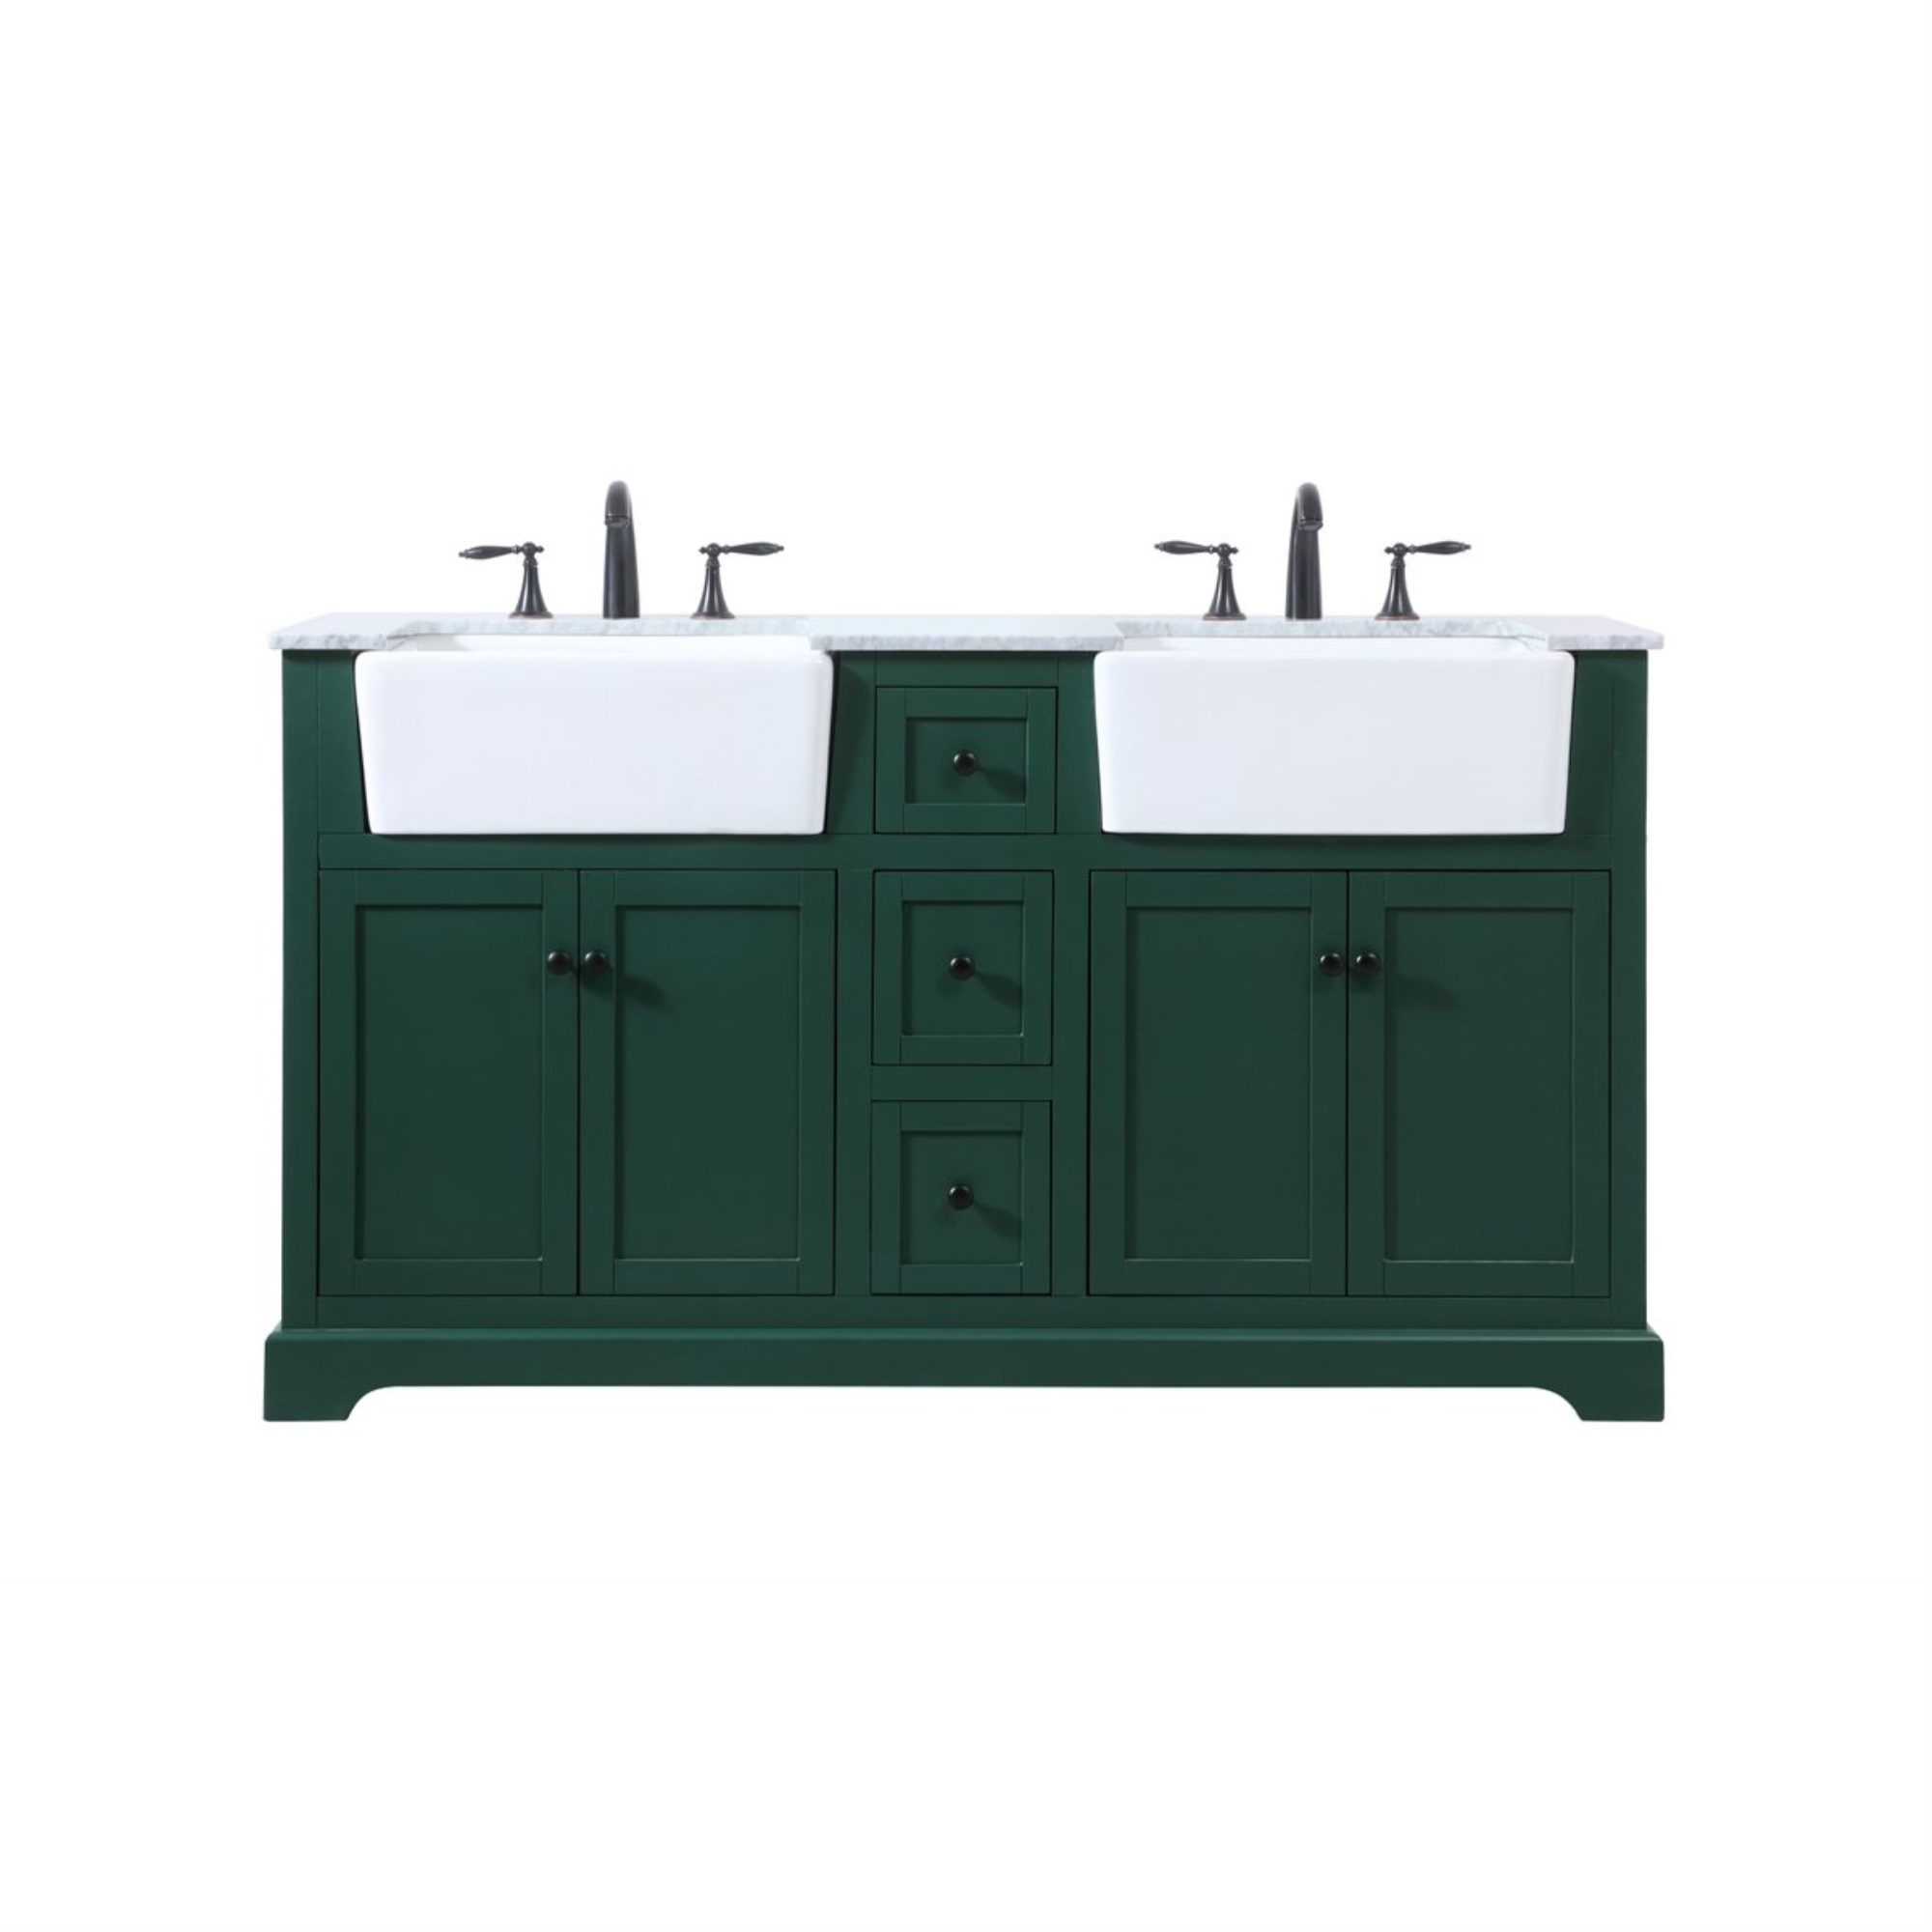 Elegant Decor 60 inch double bathroom vanity in green